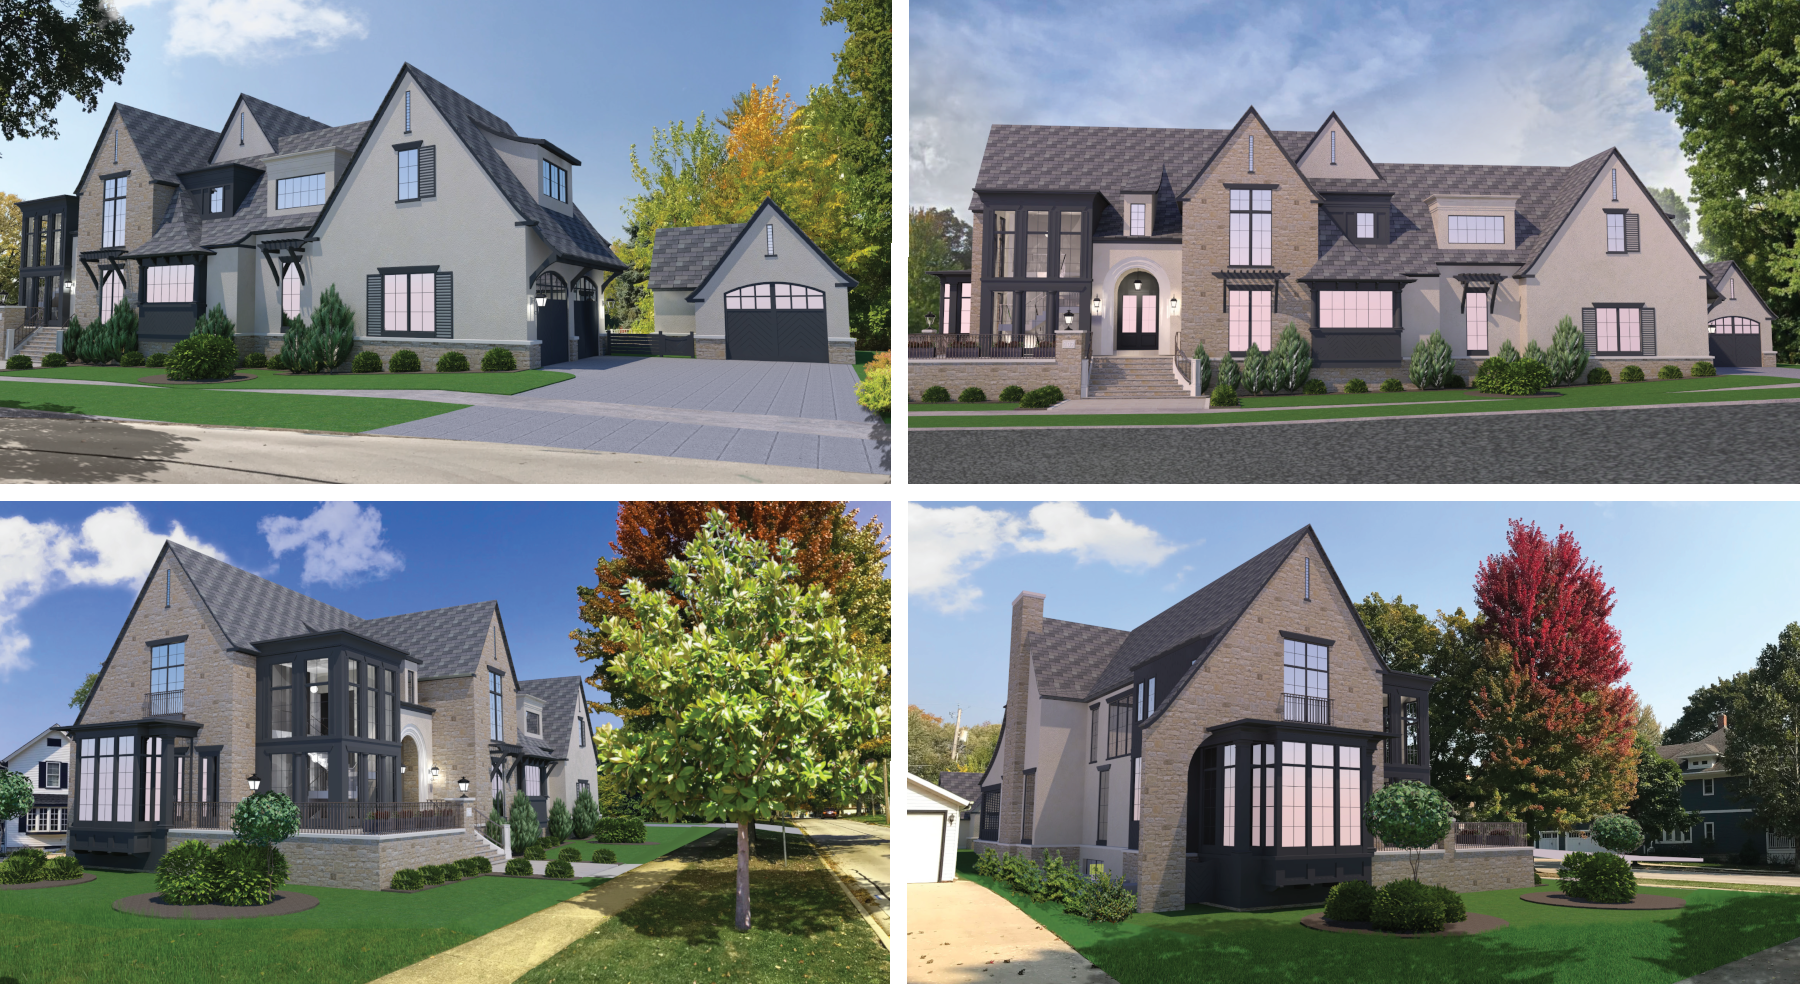 Sample 3D Model / Photoshop-Enhanced Model of a New Home Design